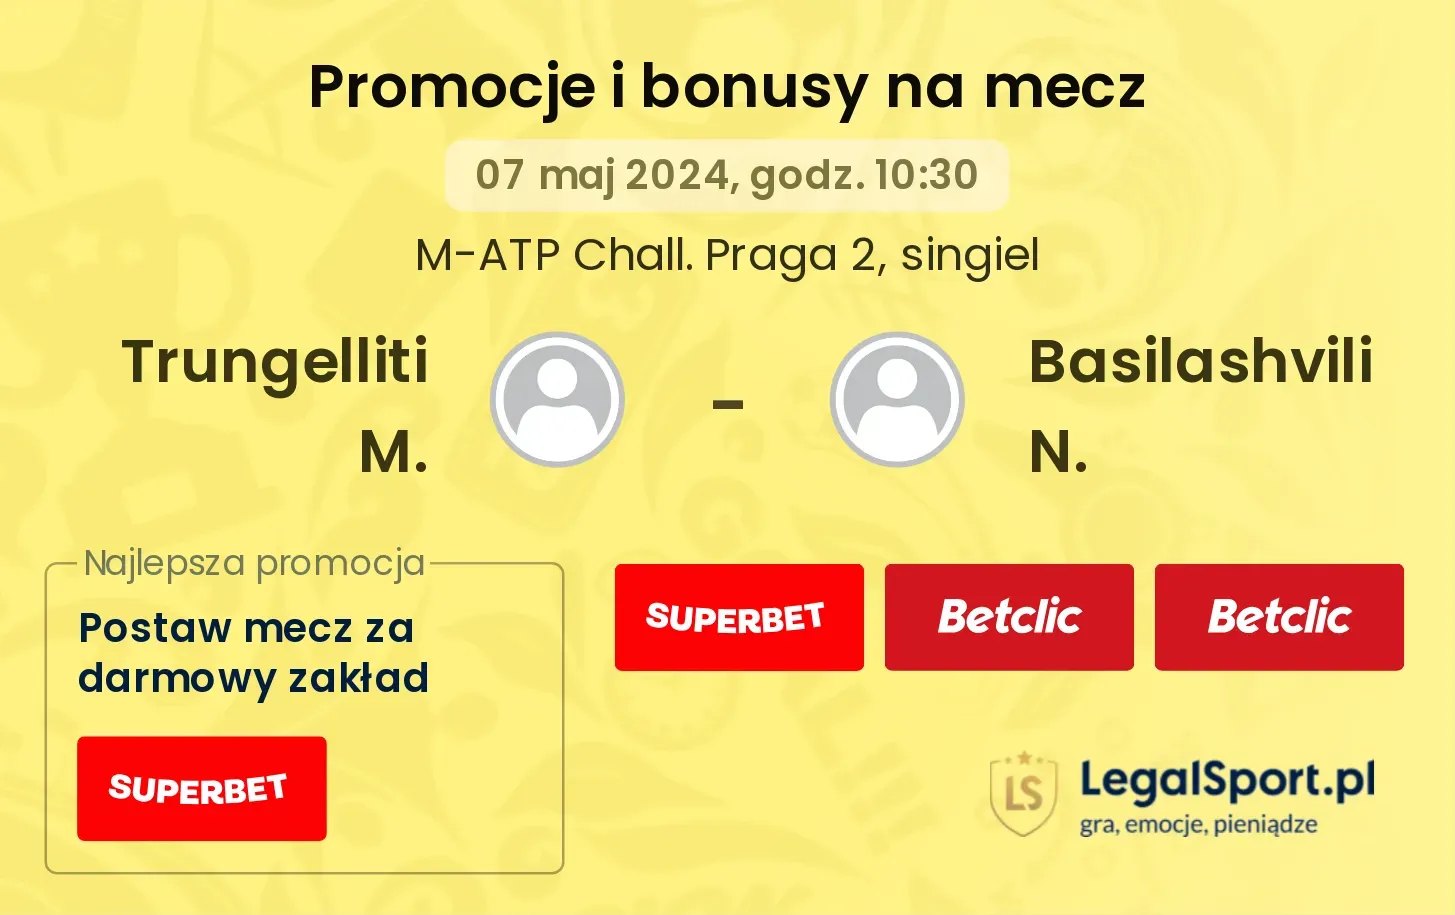 Trungelliti M. - Basilashvili N. promocje bonusy na mecz